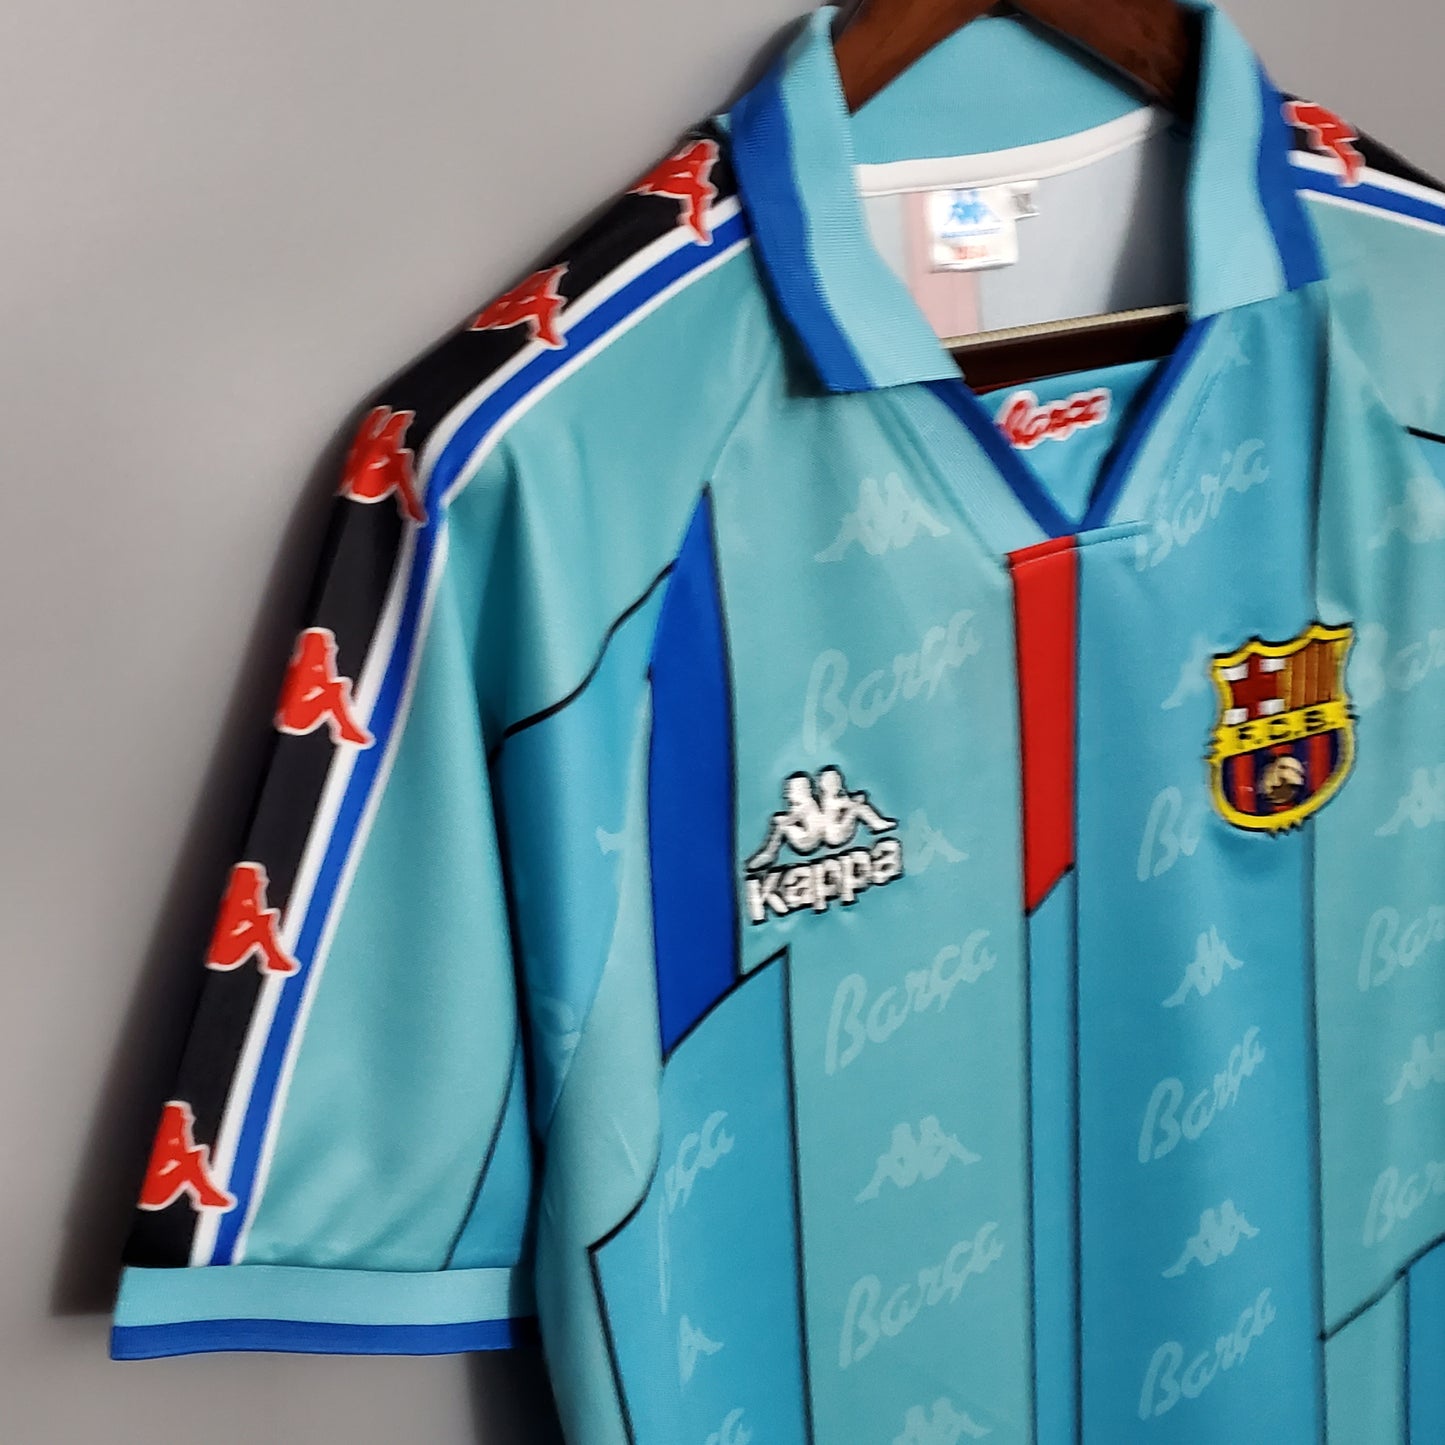 Barcelona 1996/97 Away Jersey